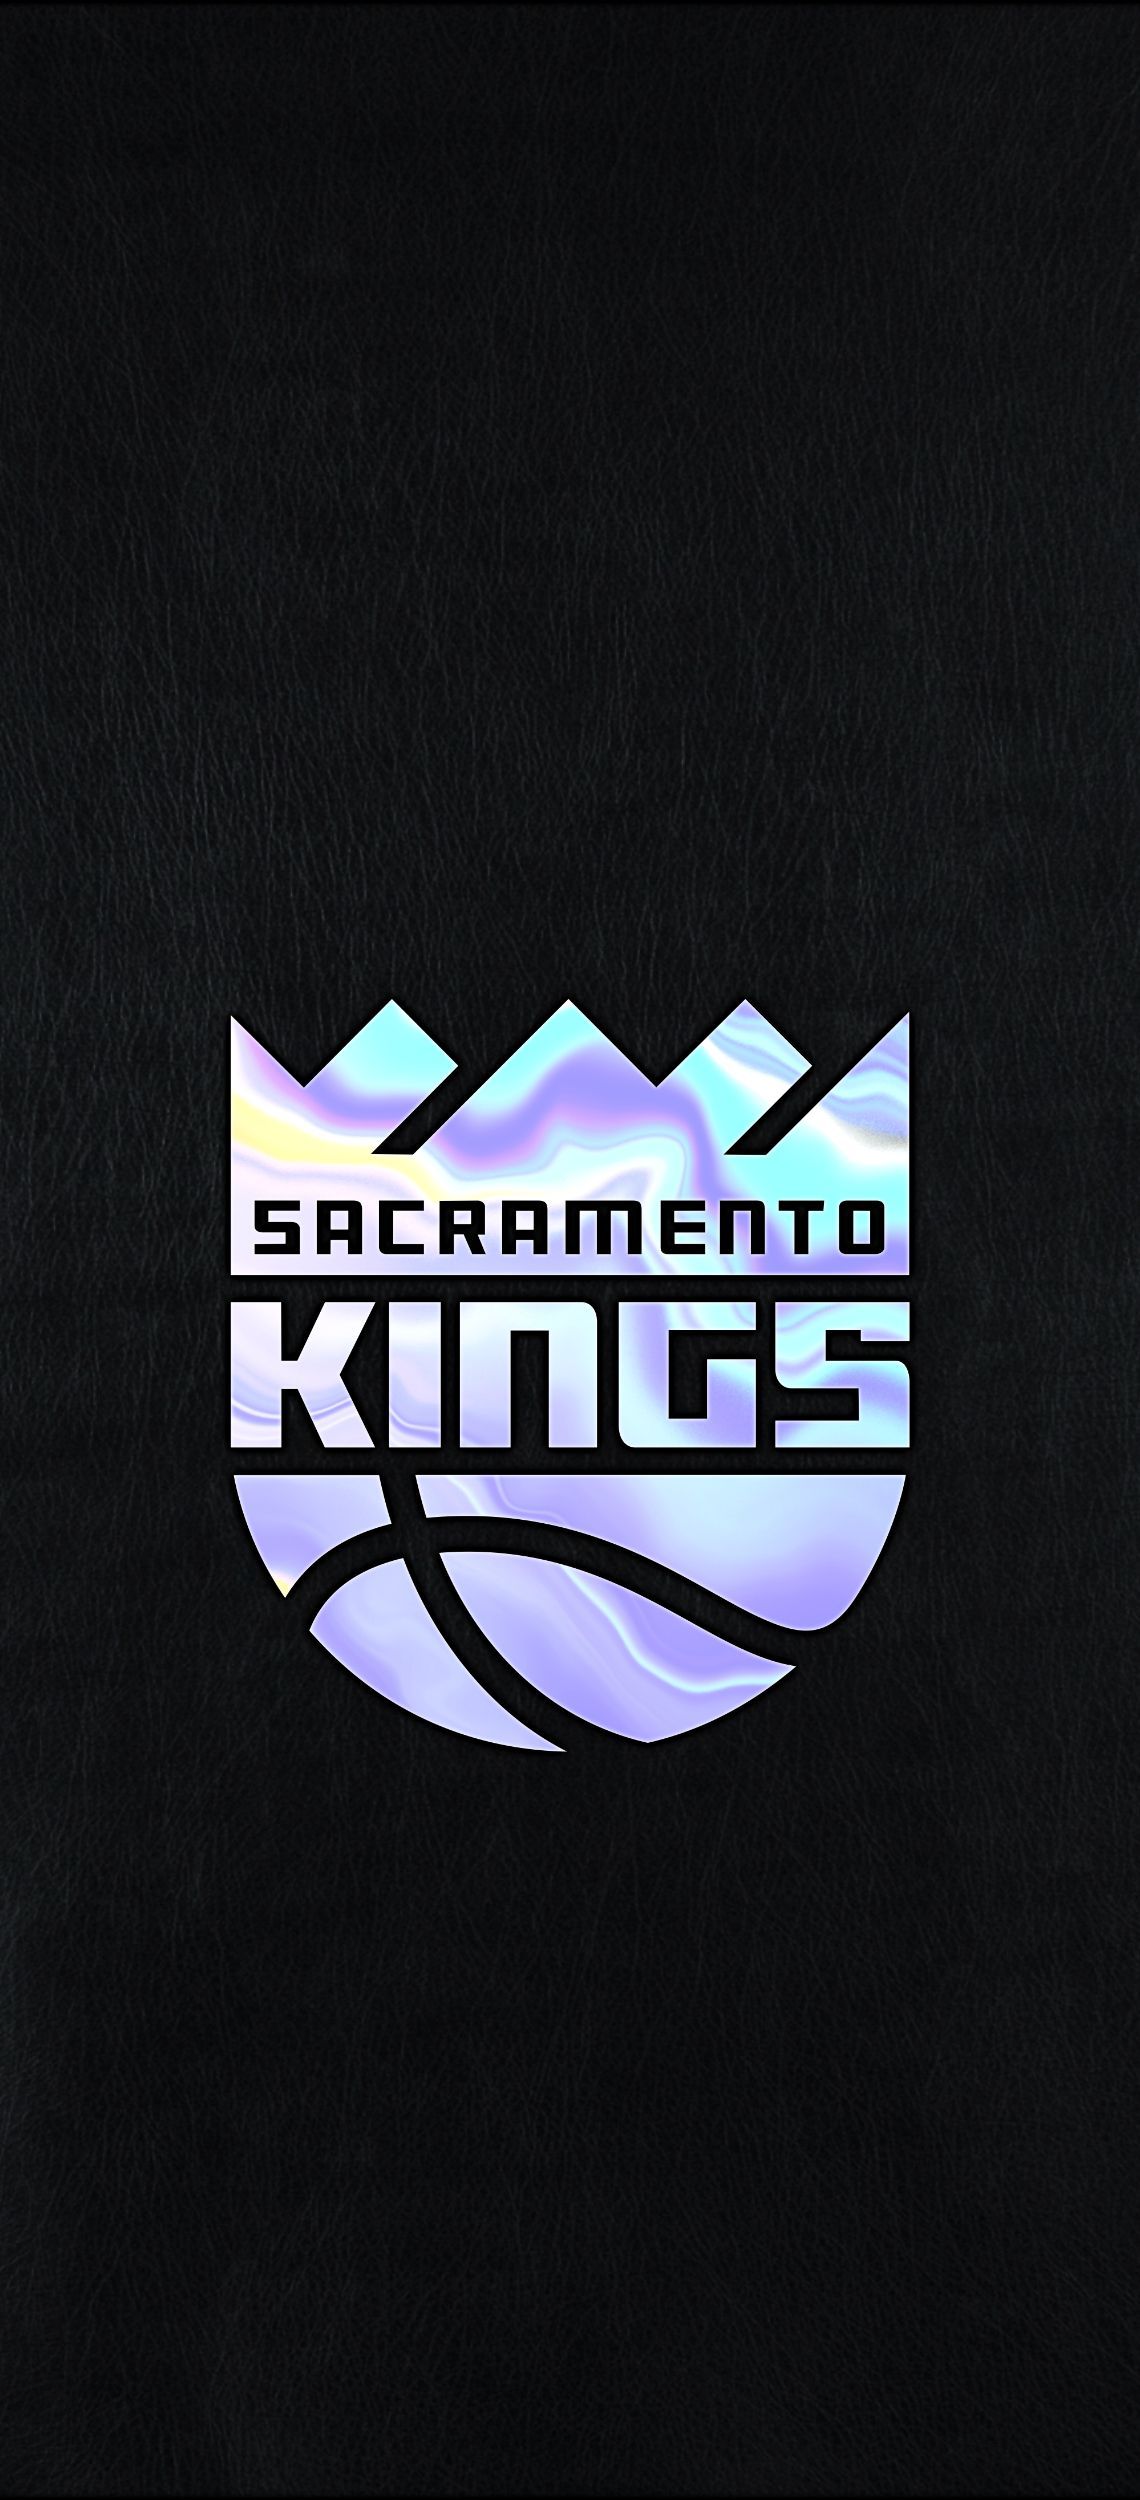 Sacramento Kings Iridescent Wallpaper. Sacramento kings, Nba basketball teams, Nba